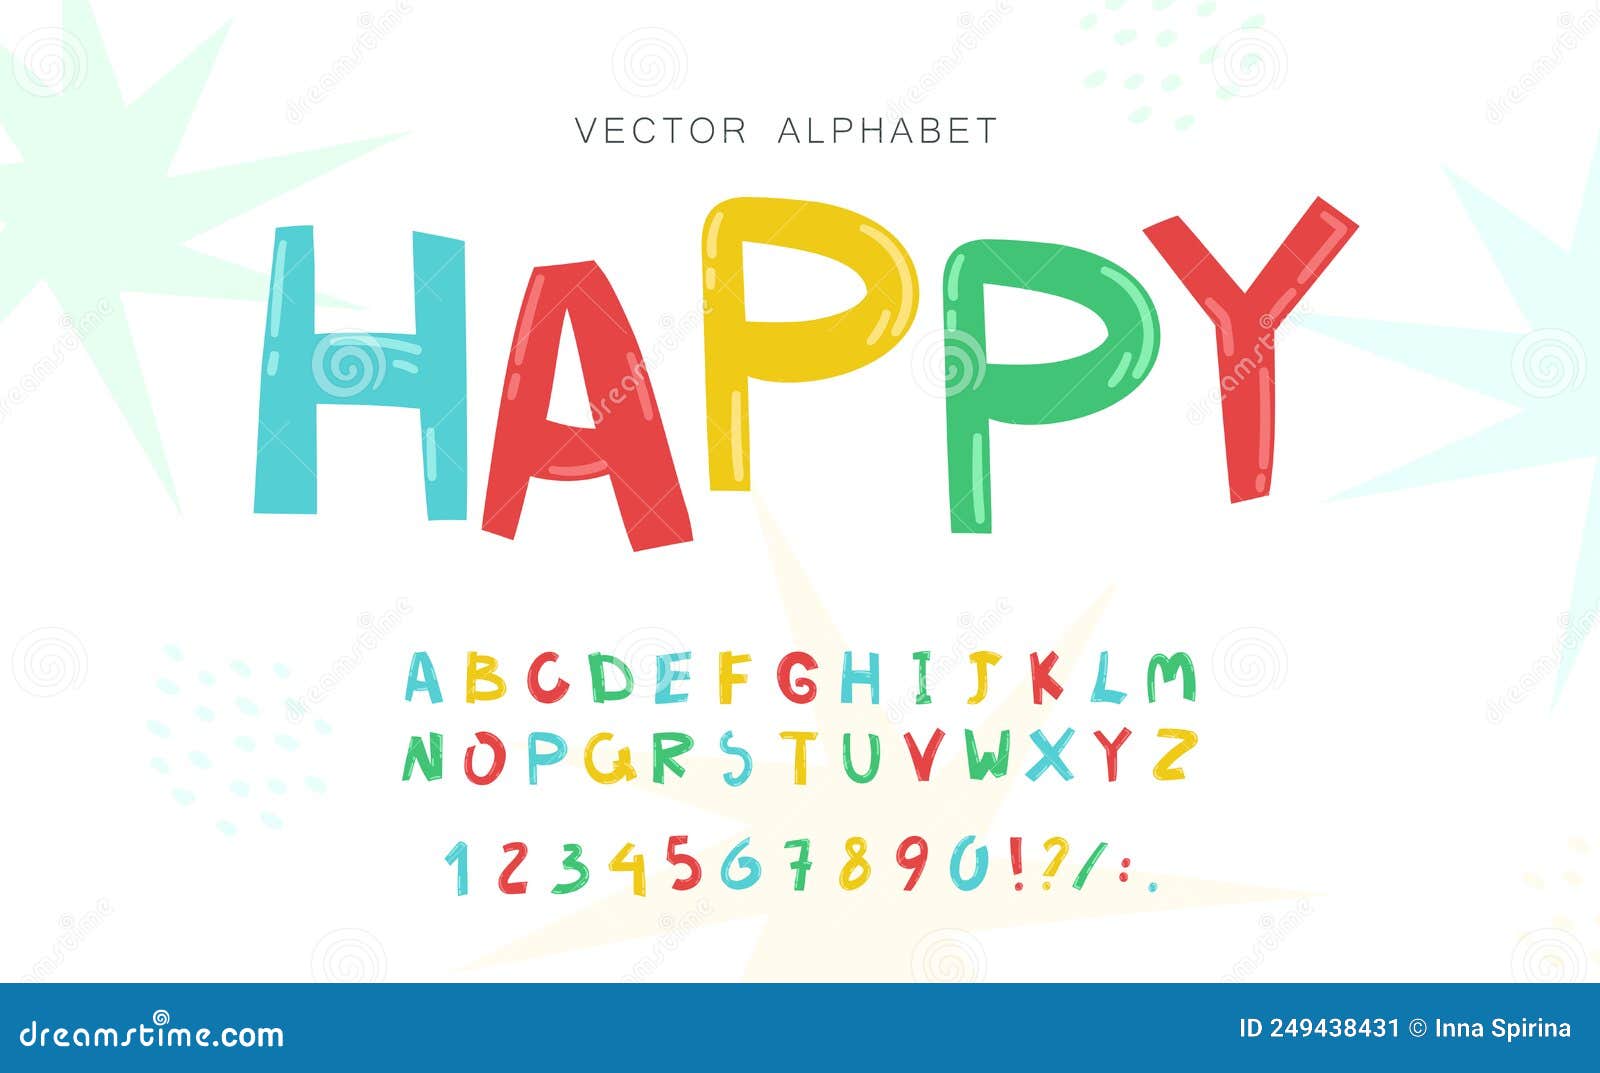 Simple Primitive Kids Alphabet, Vector Hand Drawn Letters Elements. for ...